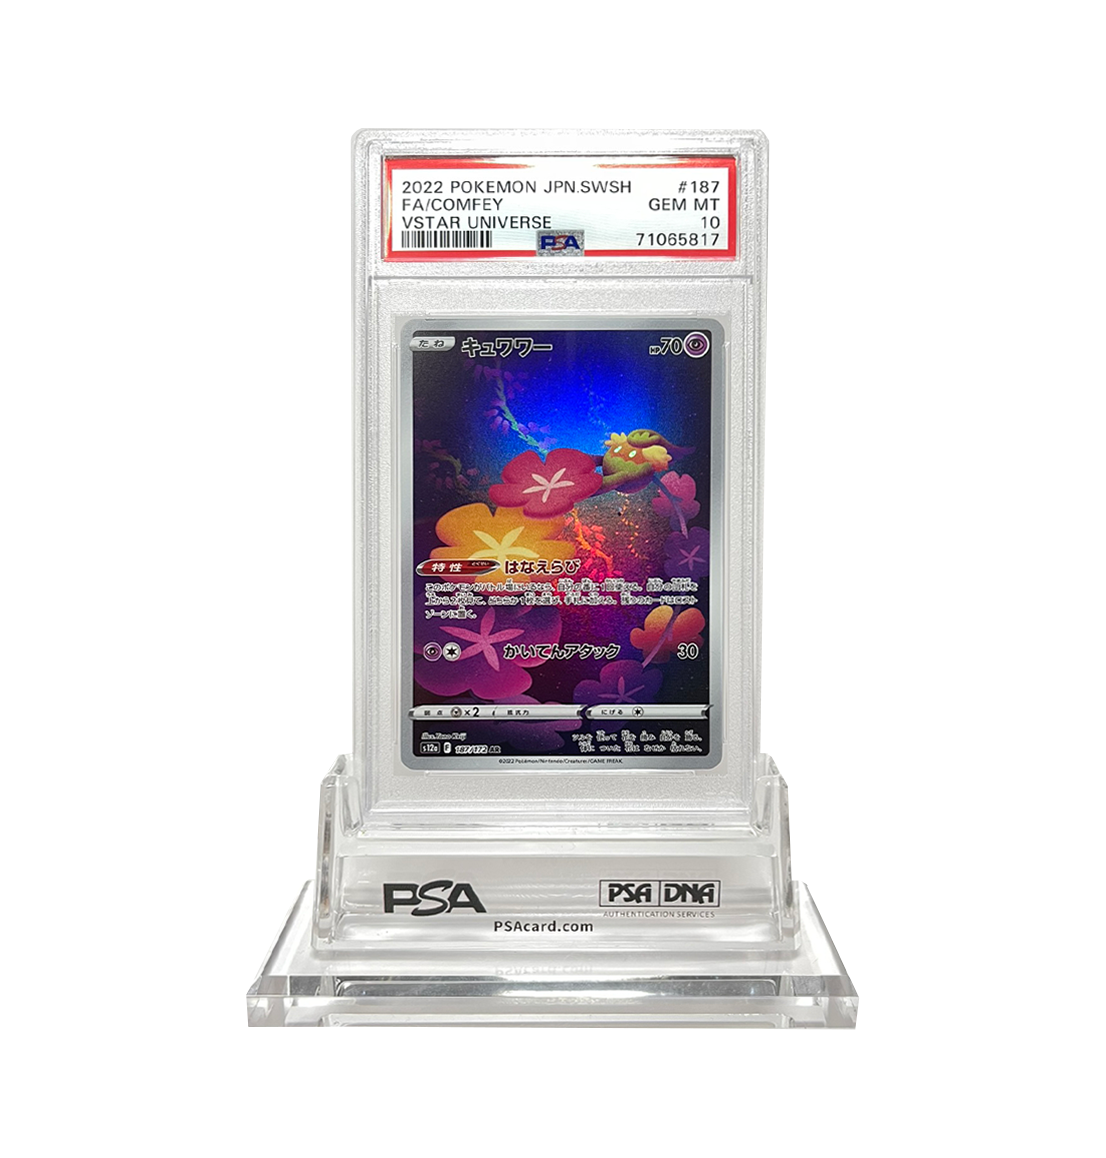 PSA 10 Comfey 187 Vstar Universe Japanese Pokemon card